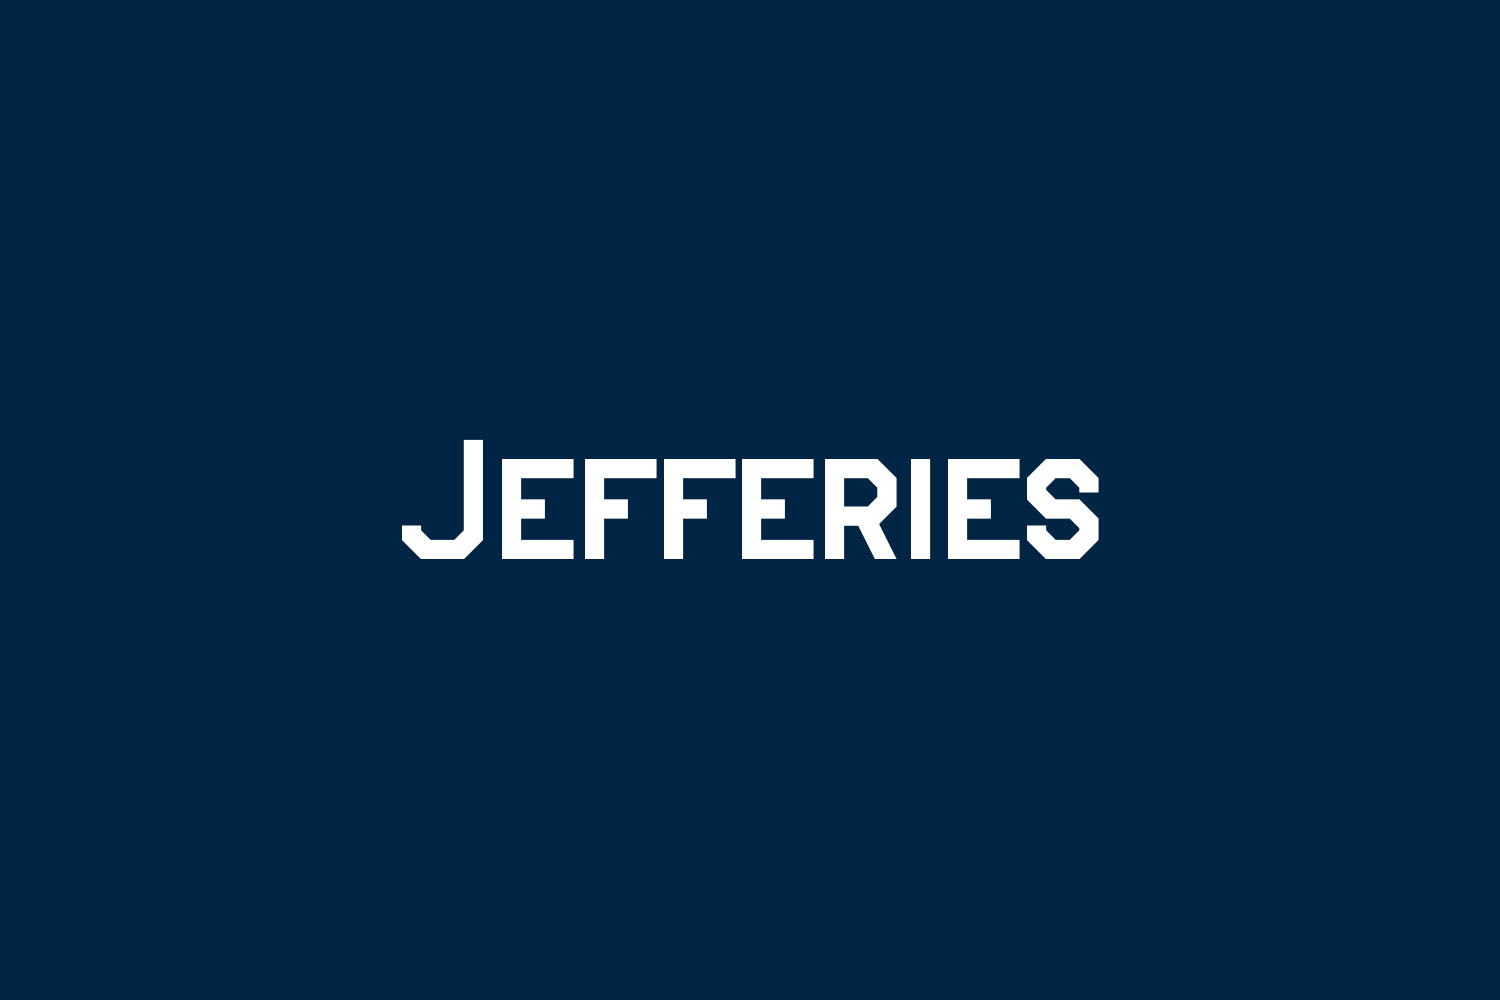 Jefferies Free Font